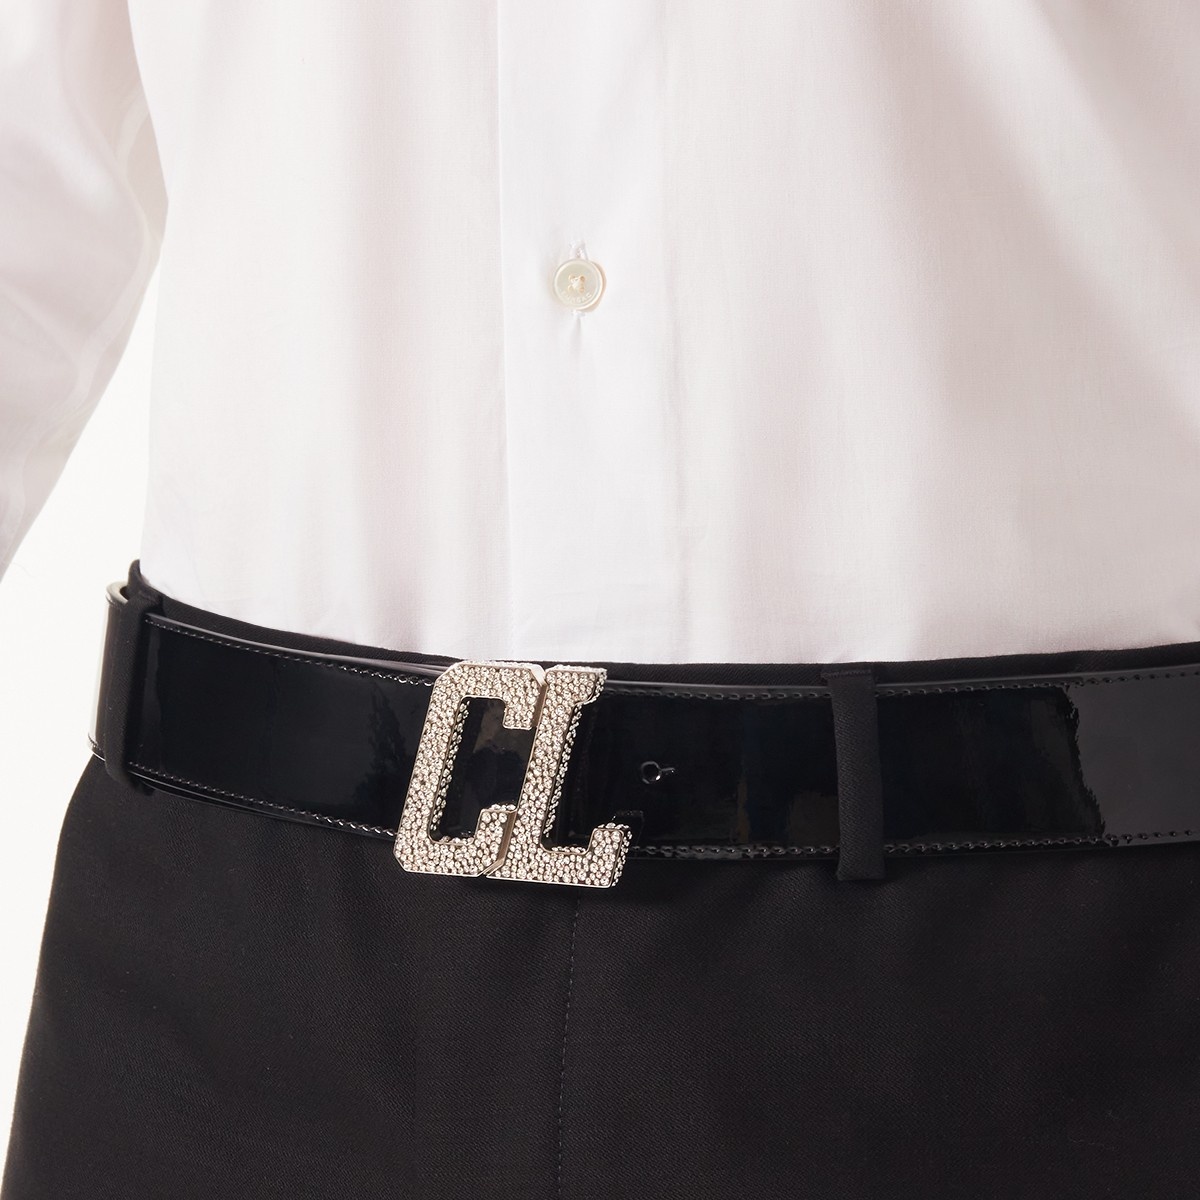 Happy Rui CL Logo belt buckle - 2